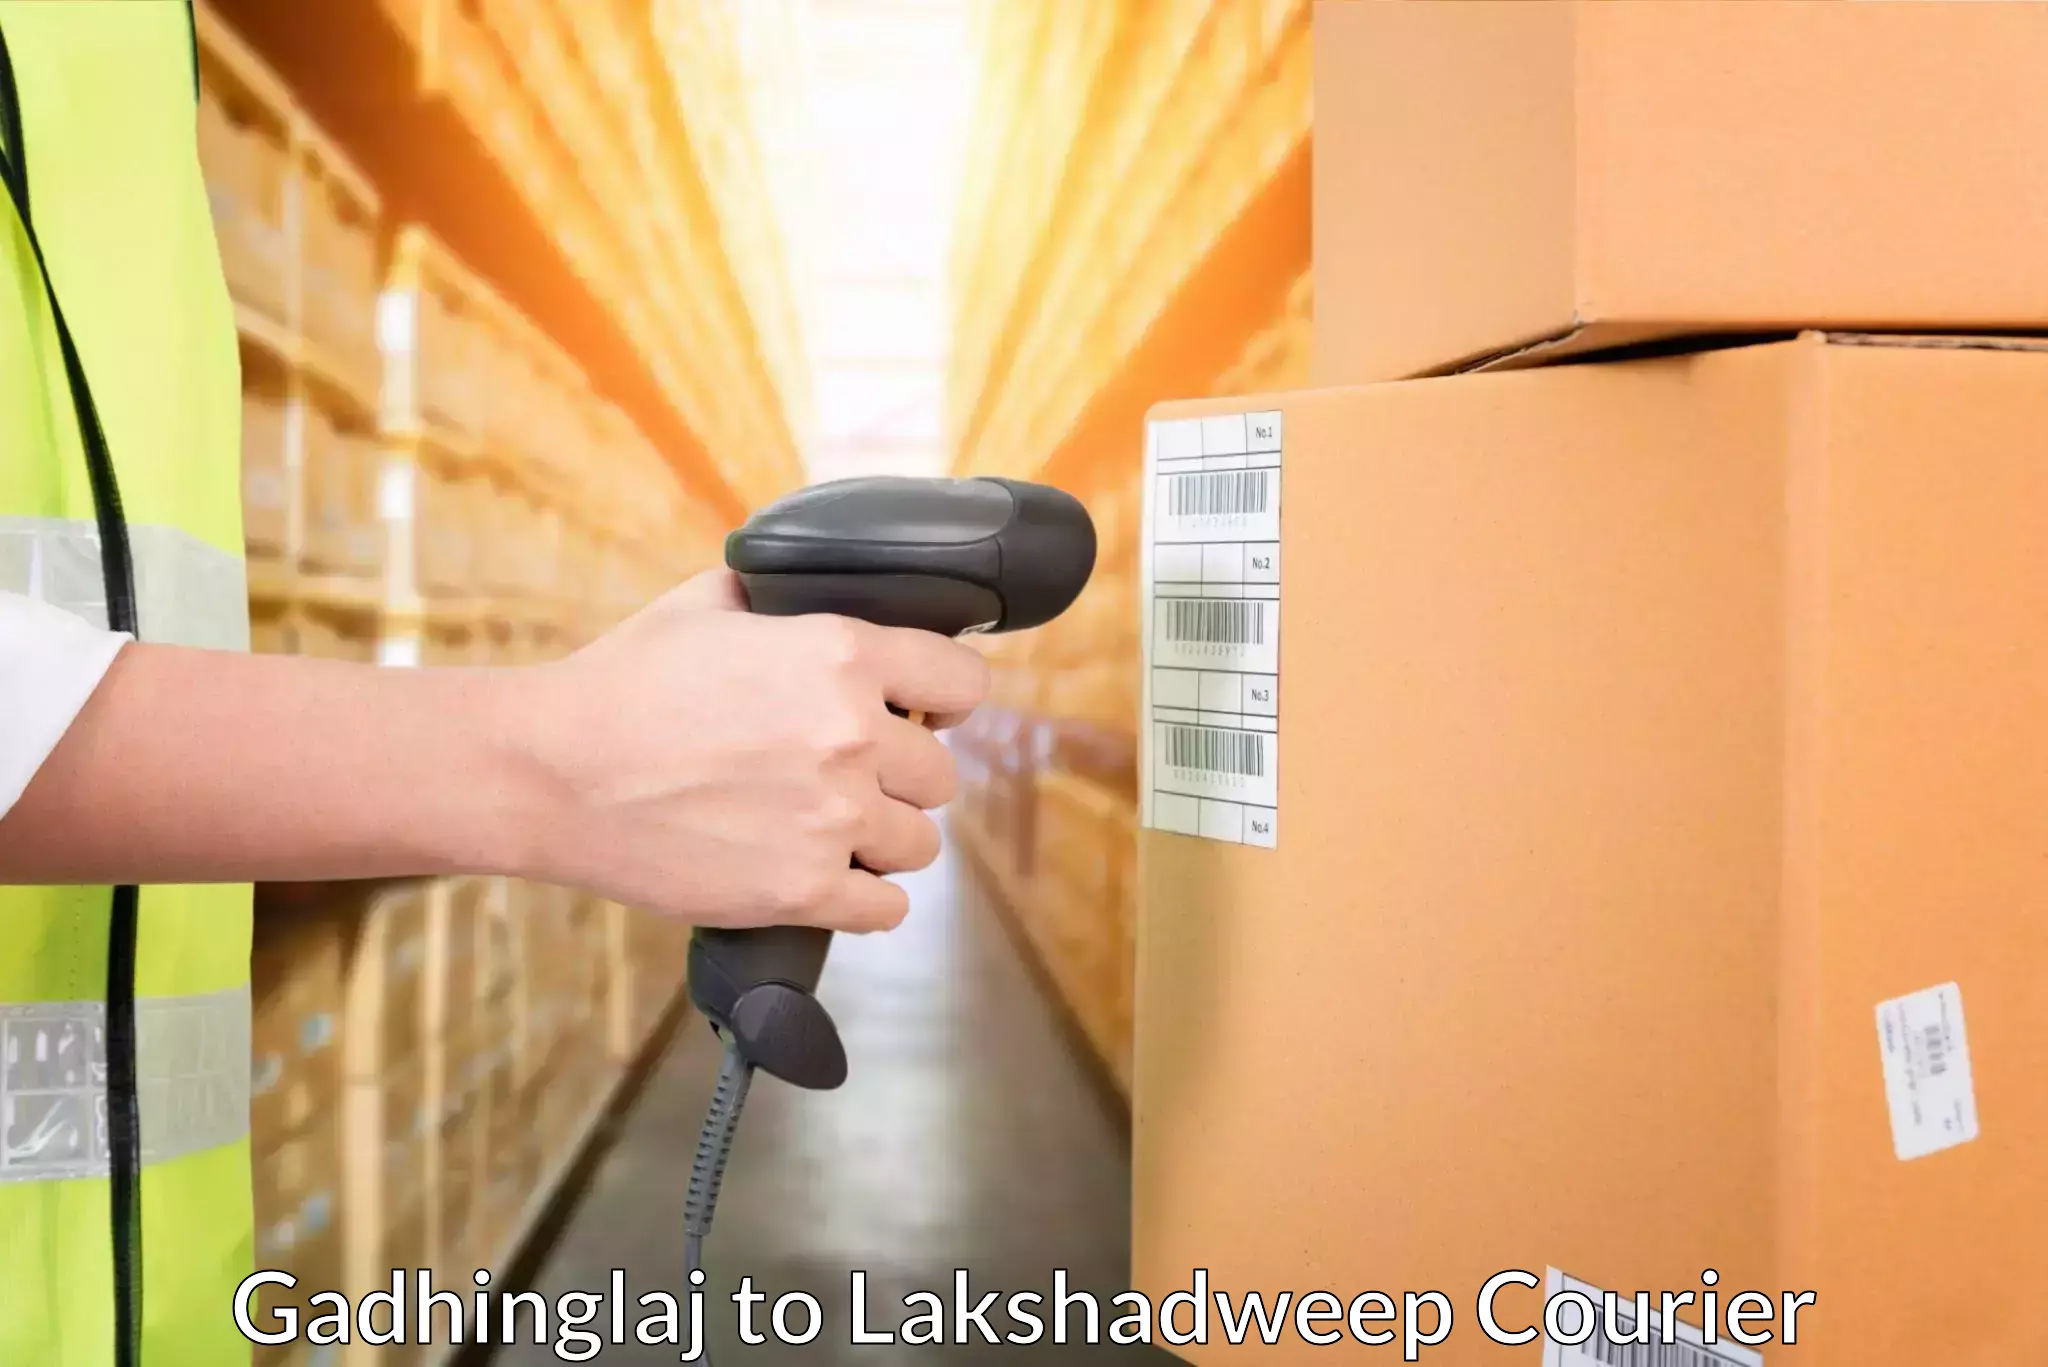 Efficient cargo handling in Gadhinglaj to Lakshadweep